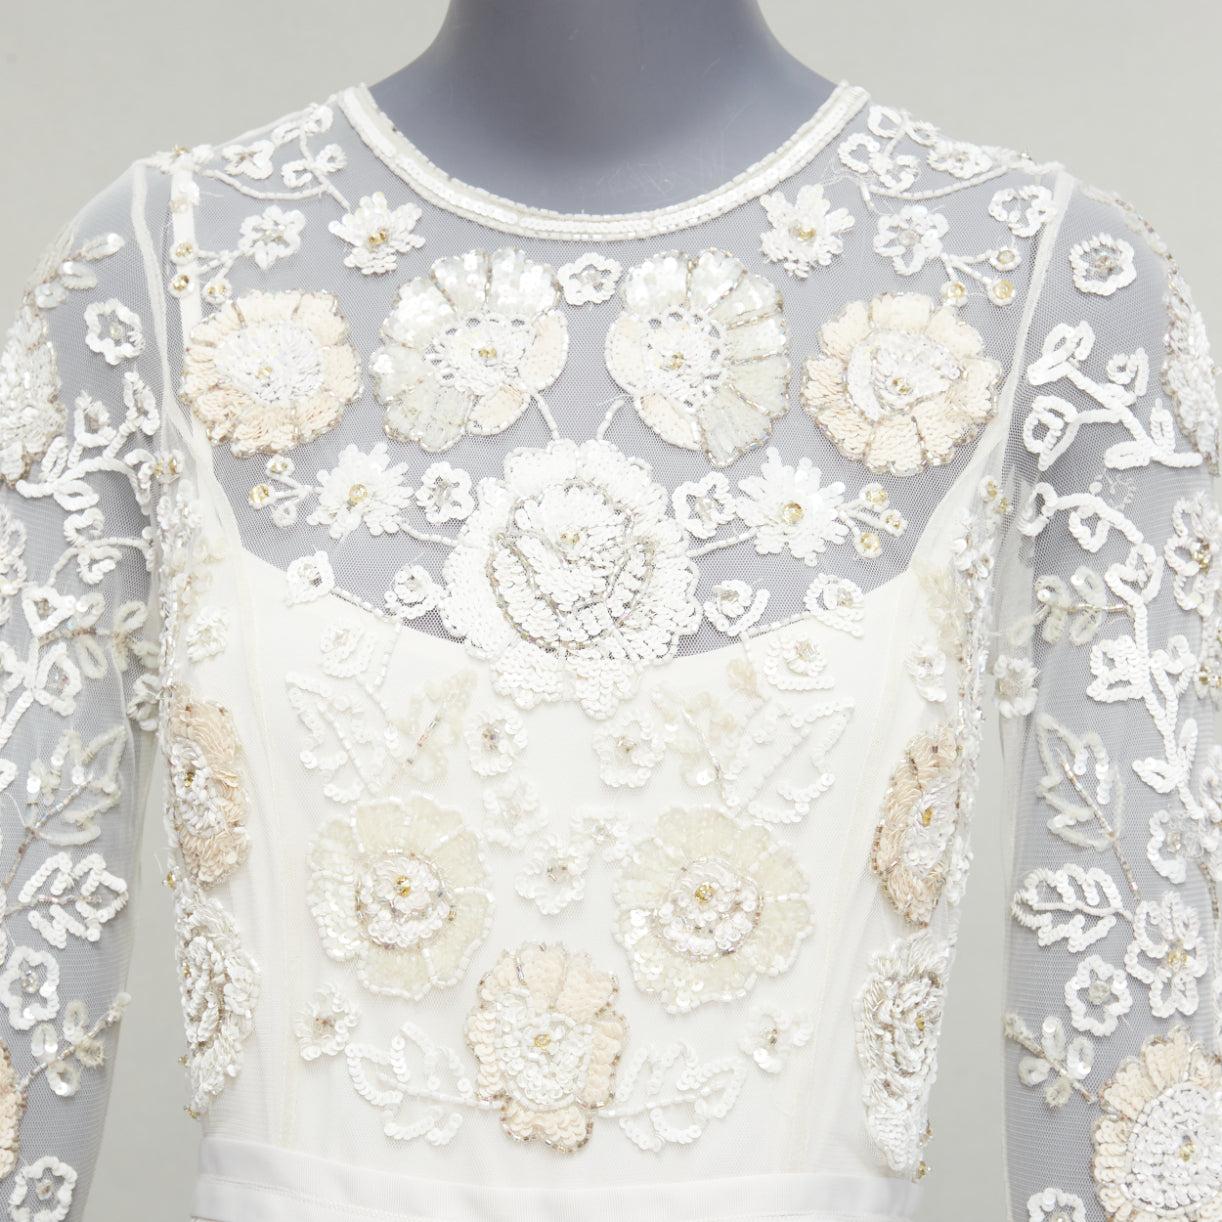 NEEDLE & THREAD Bridal white silver beads embellish chiffon overlay gown UK6 XS 2